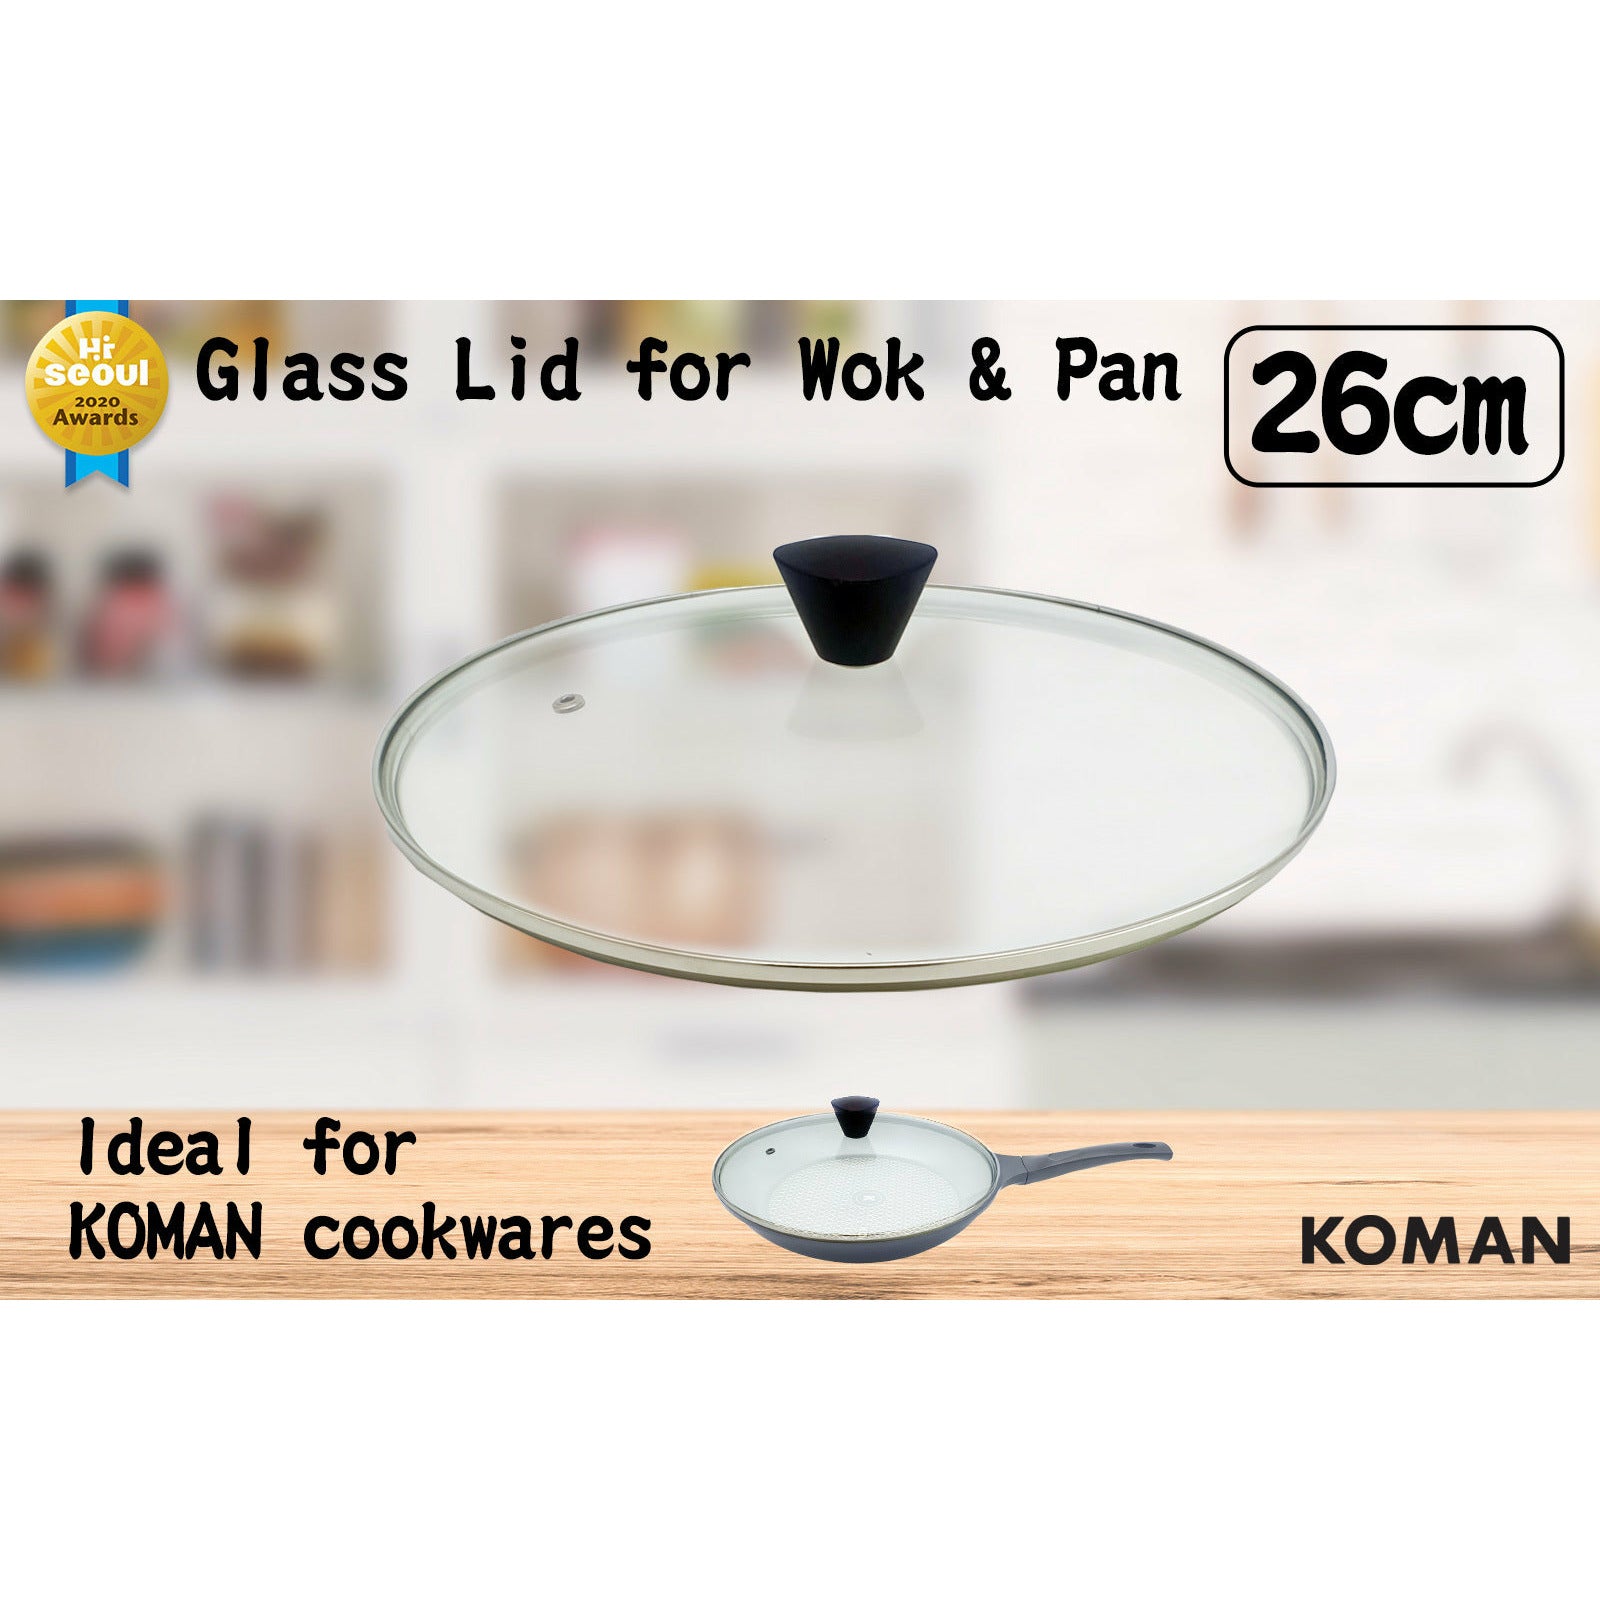 KOMAN 28cm Stainless Steel Glass Lid with Bakelite Handle